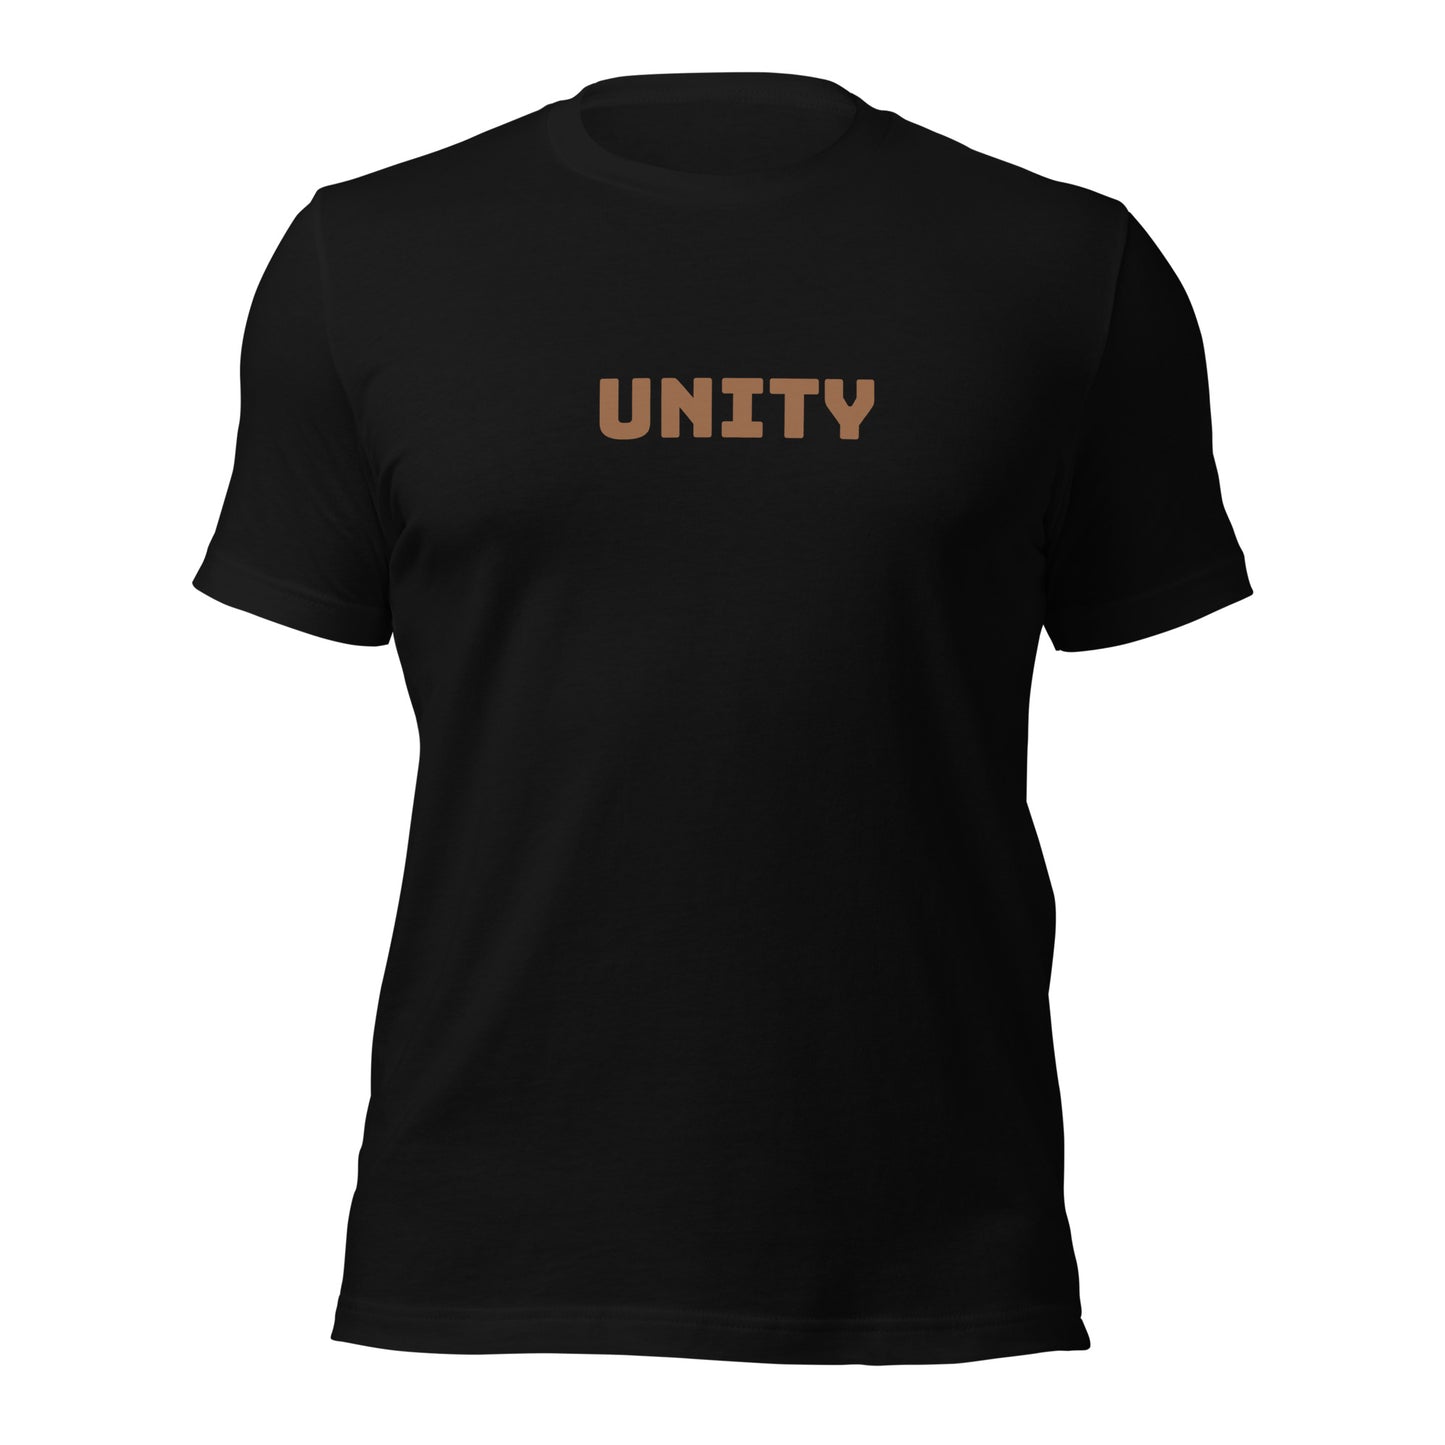 Unity t-shirt